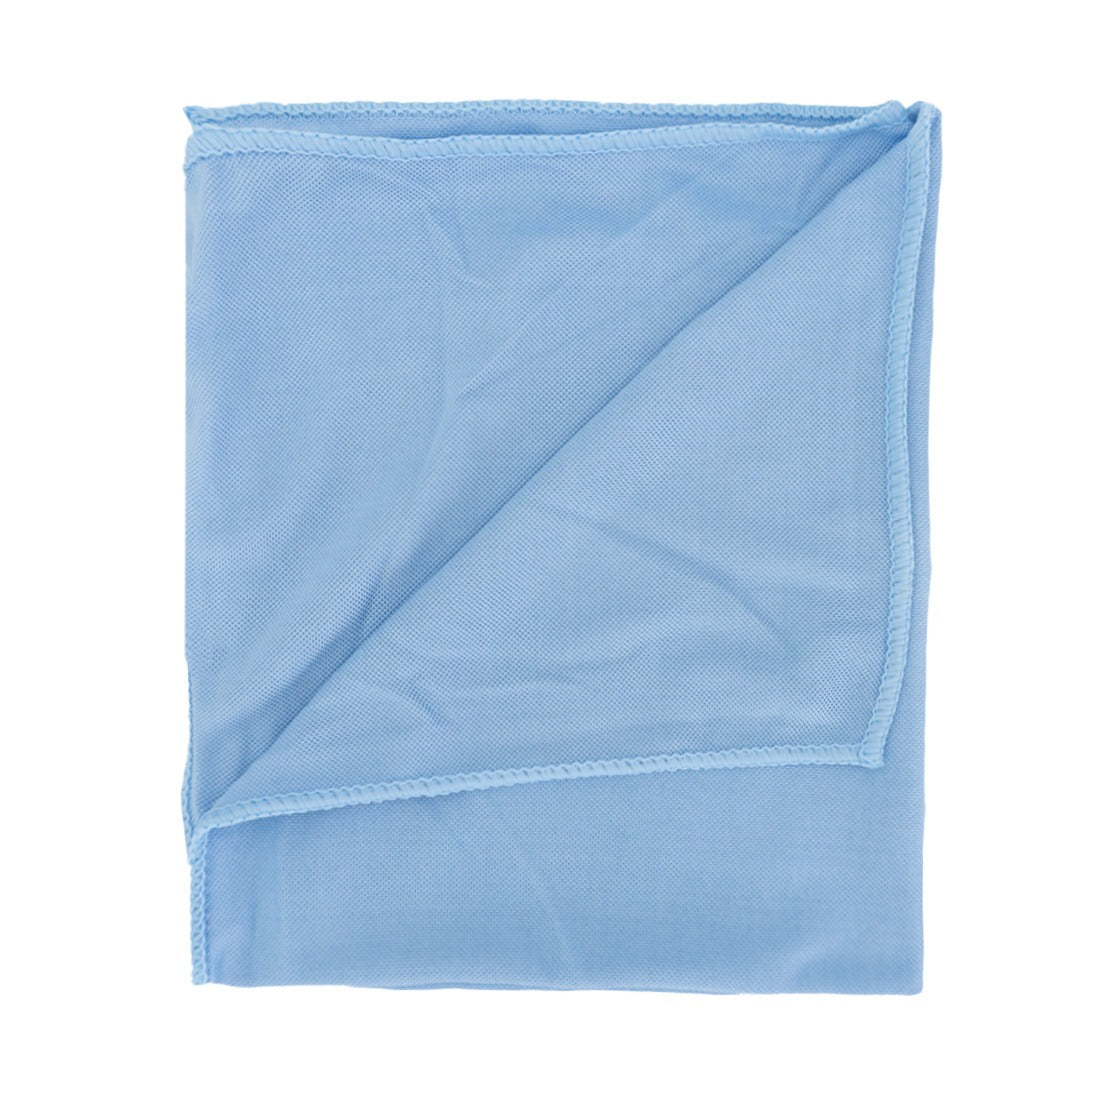 XERO Jolt Microfiber Towel Folded Top Layer Front View